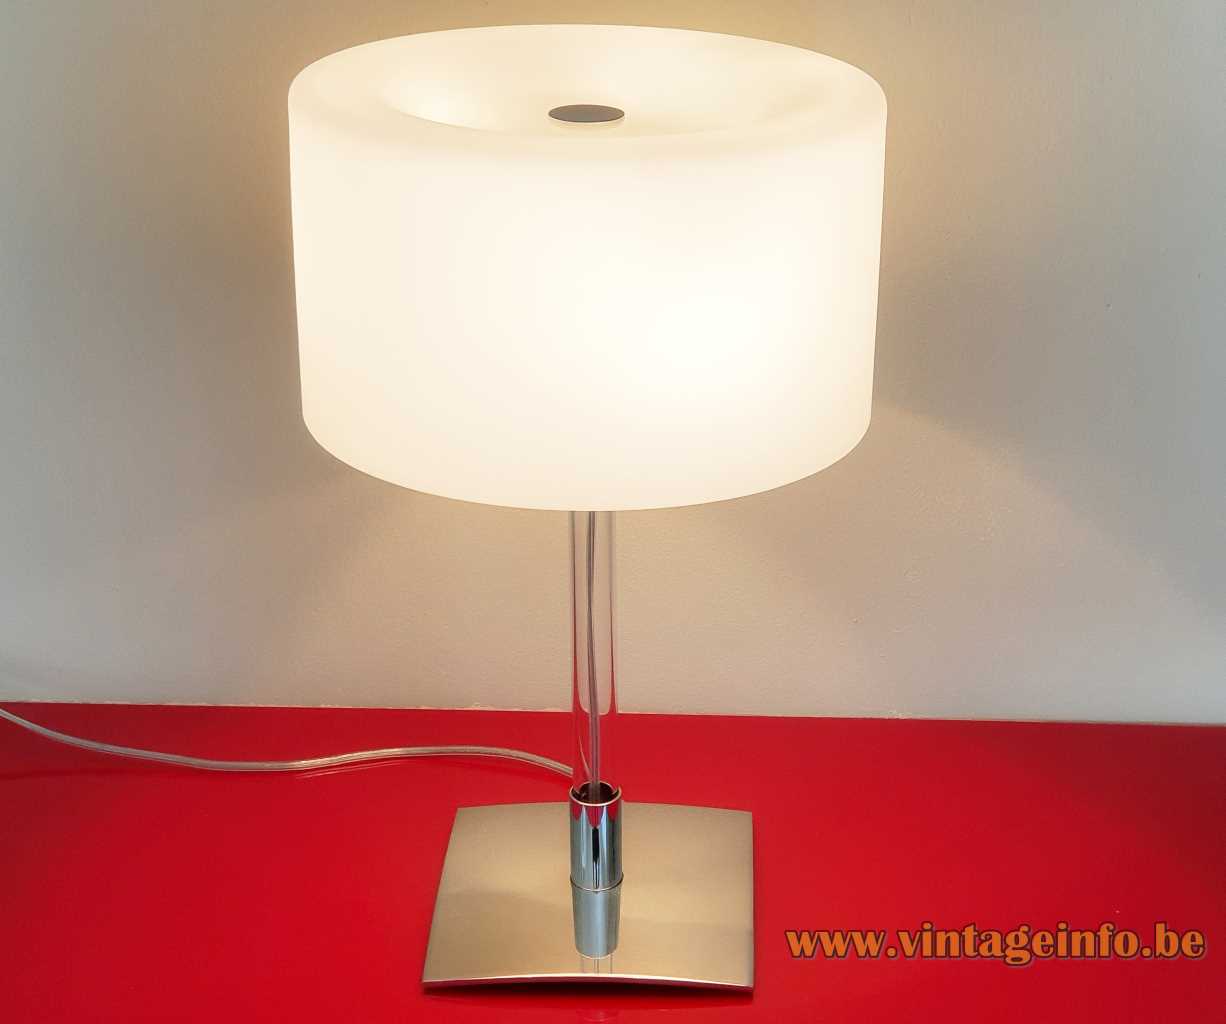 FontanaArte Drum table lamp 2005 design: Franco Raggi steel base glass rod opal glass lampshade Italy